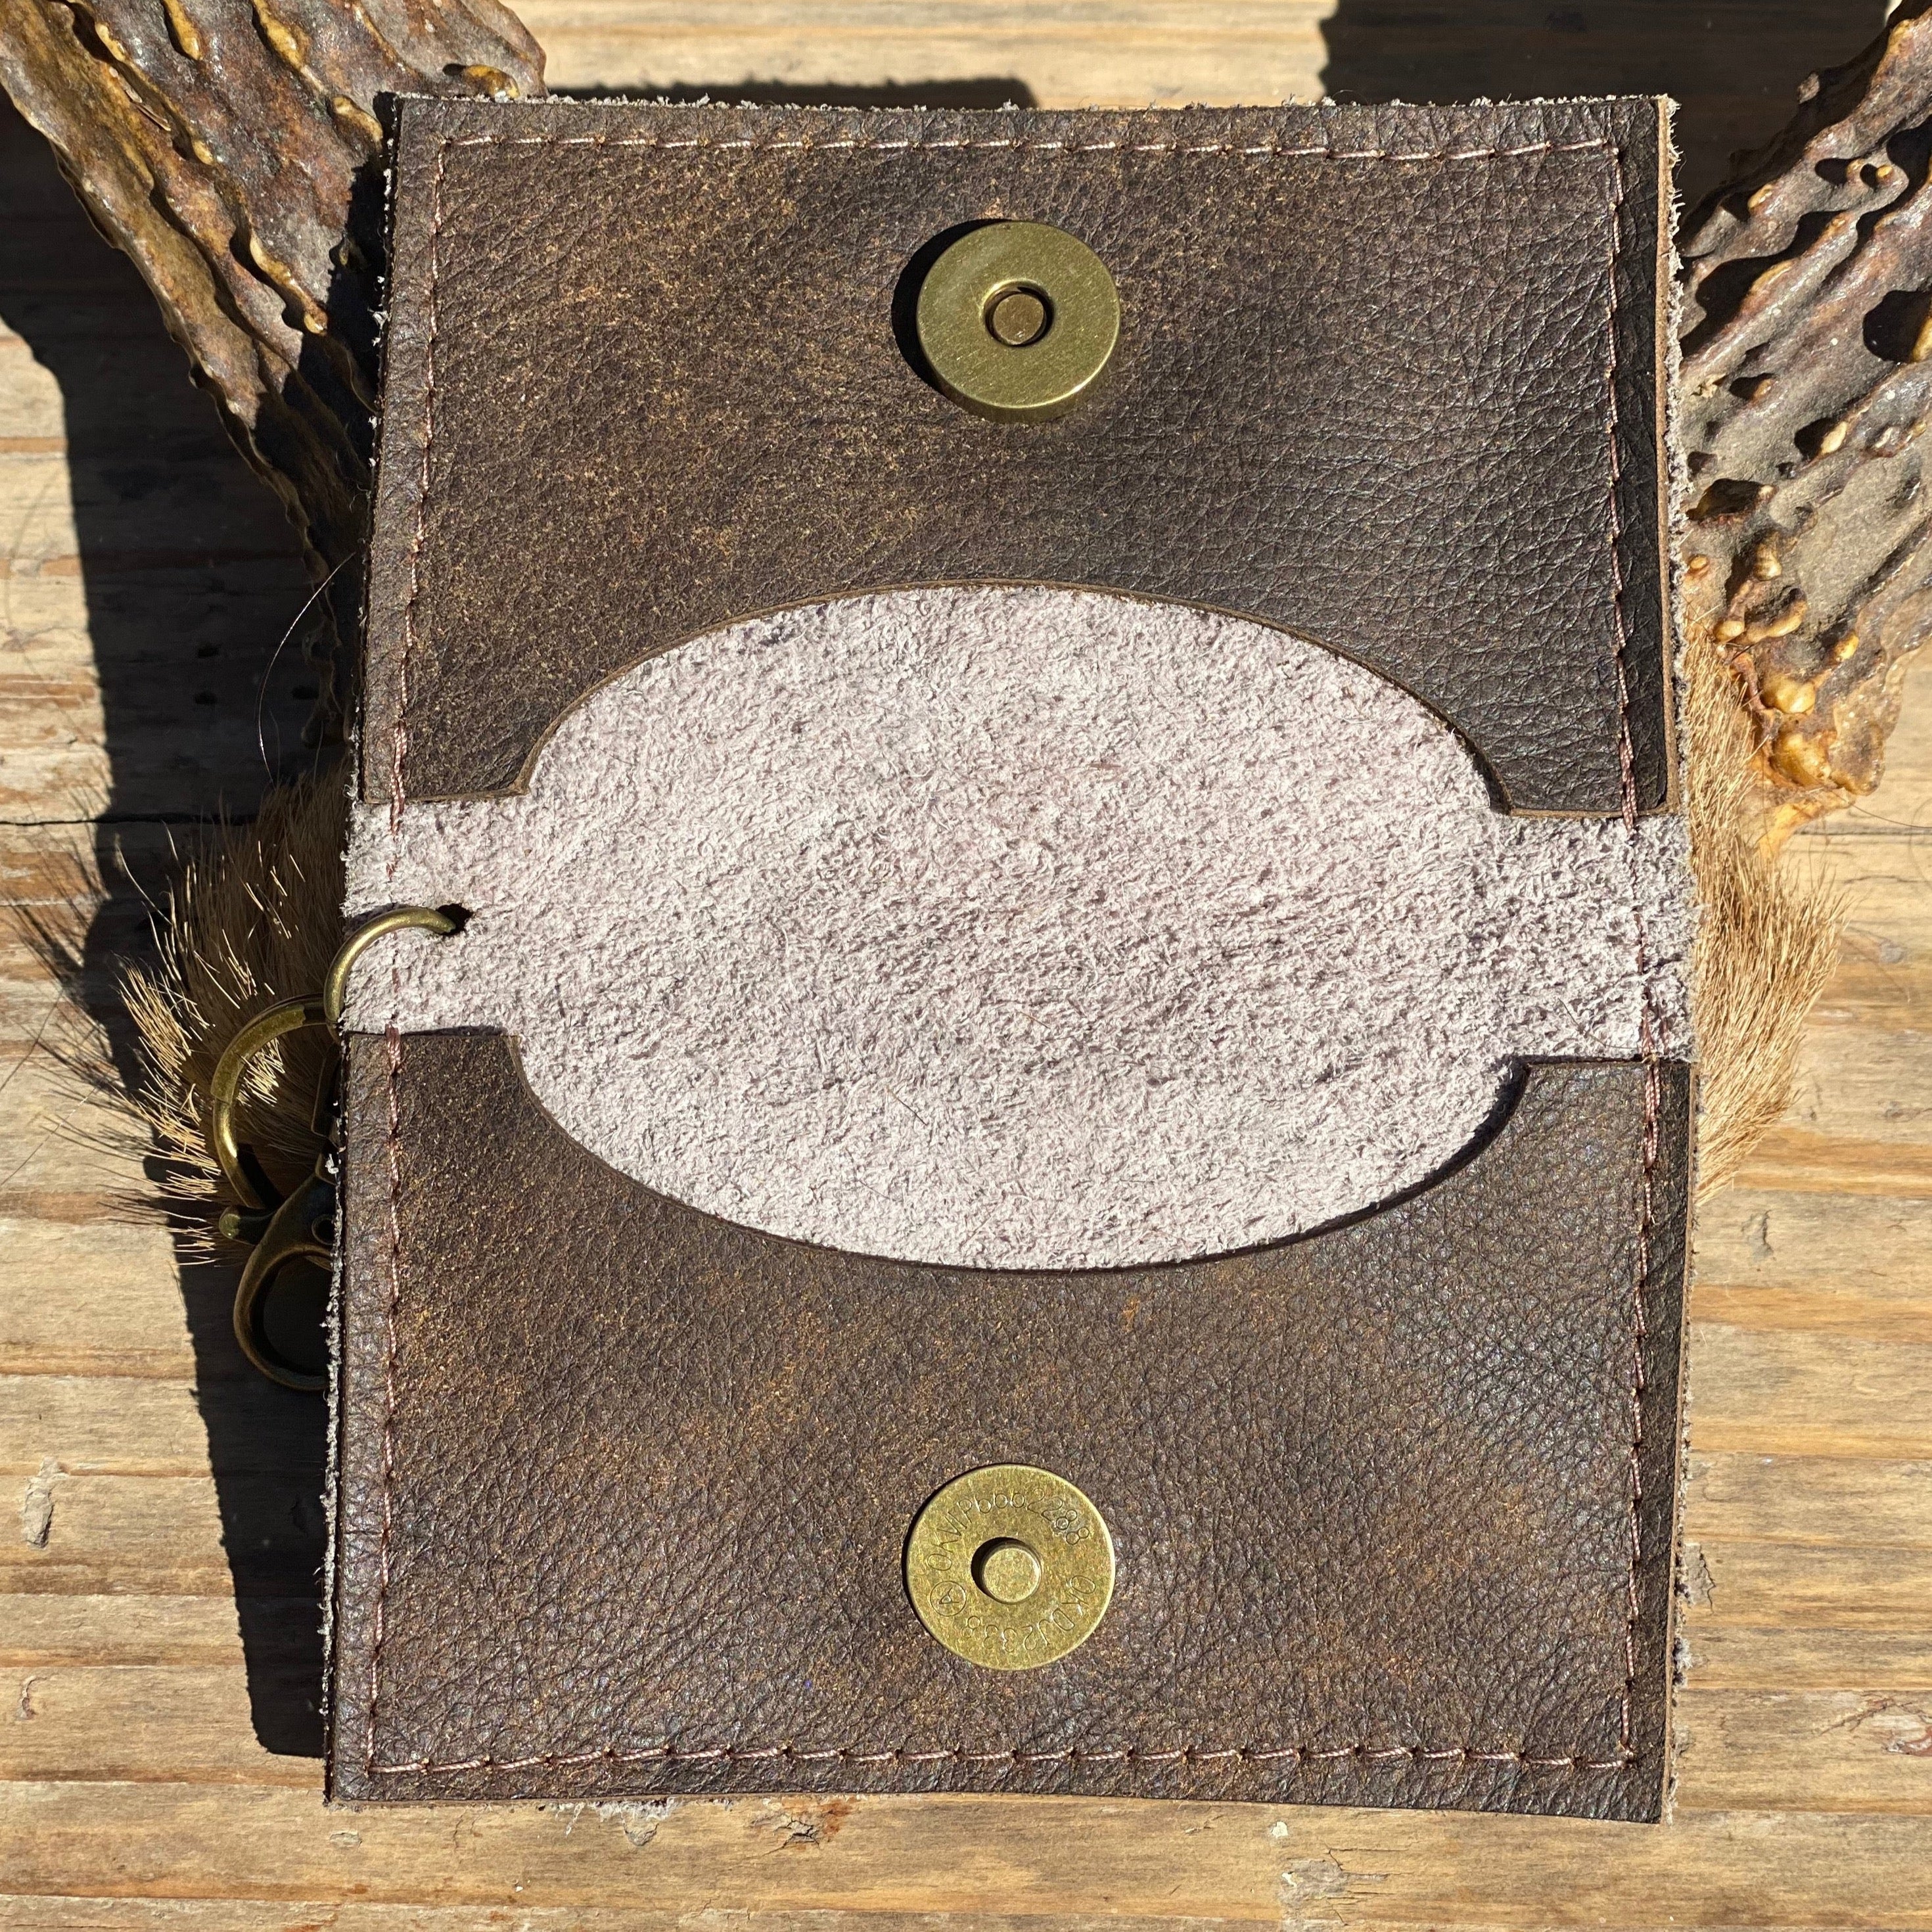 Keep It Gypsy Distressed Leather Keychain Wallet